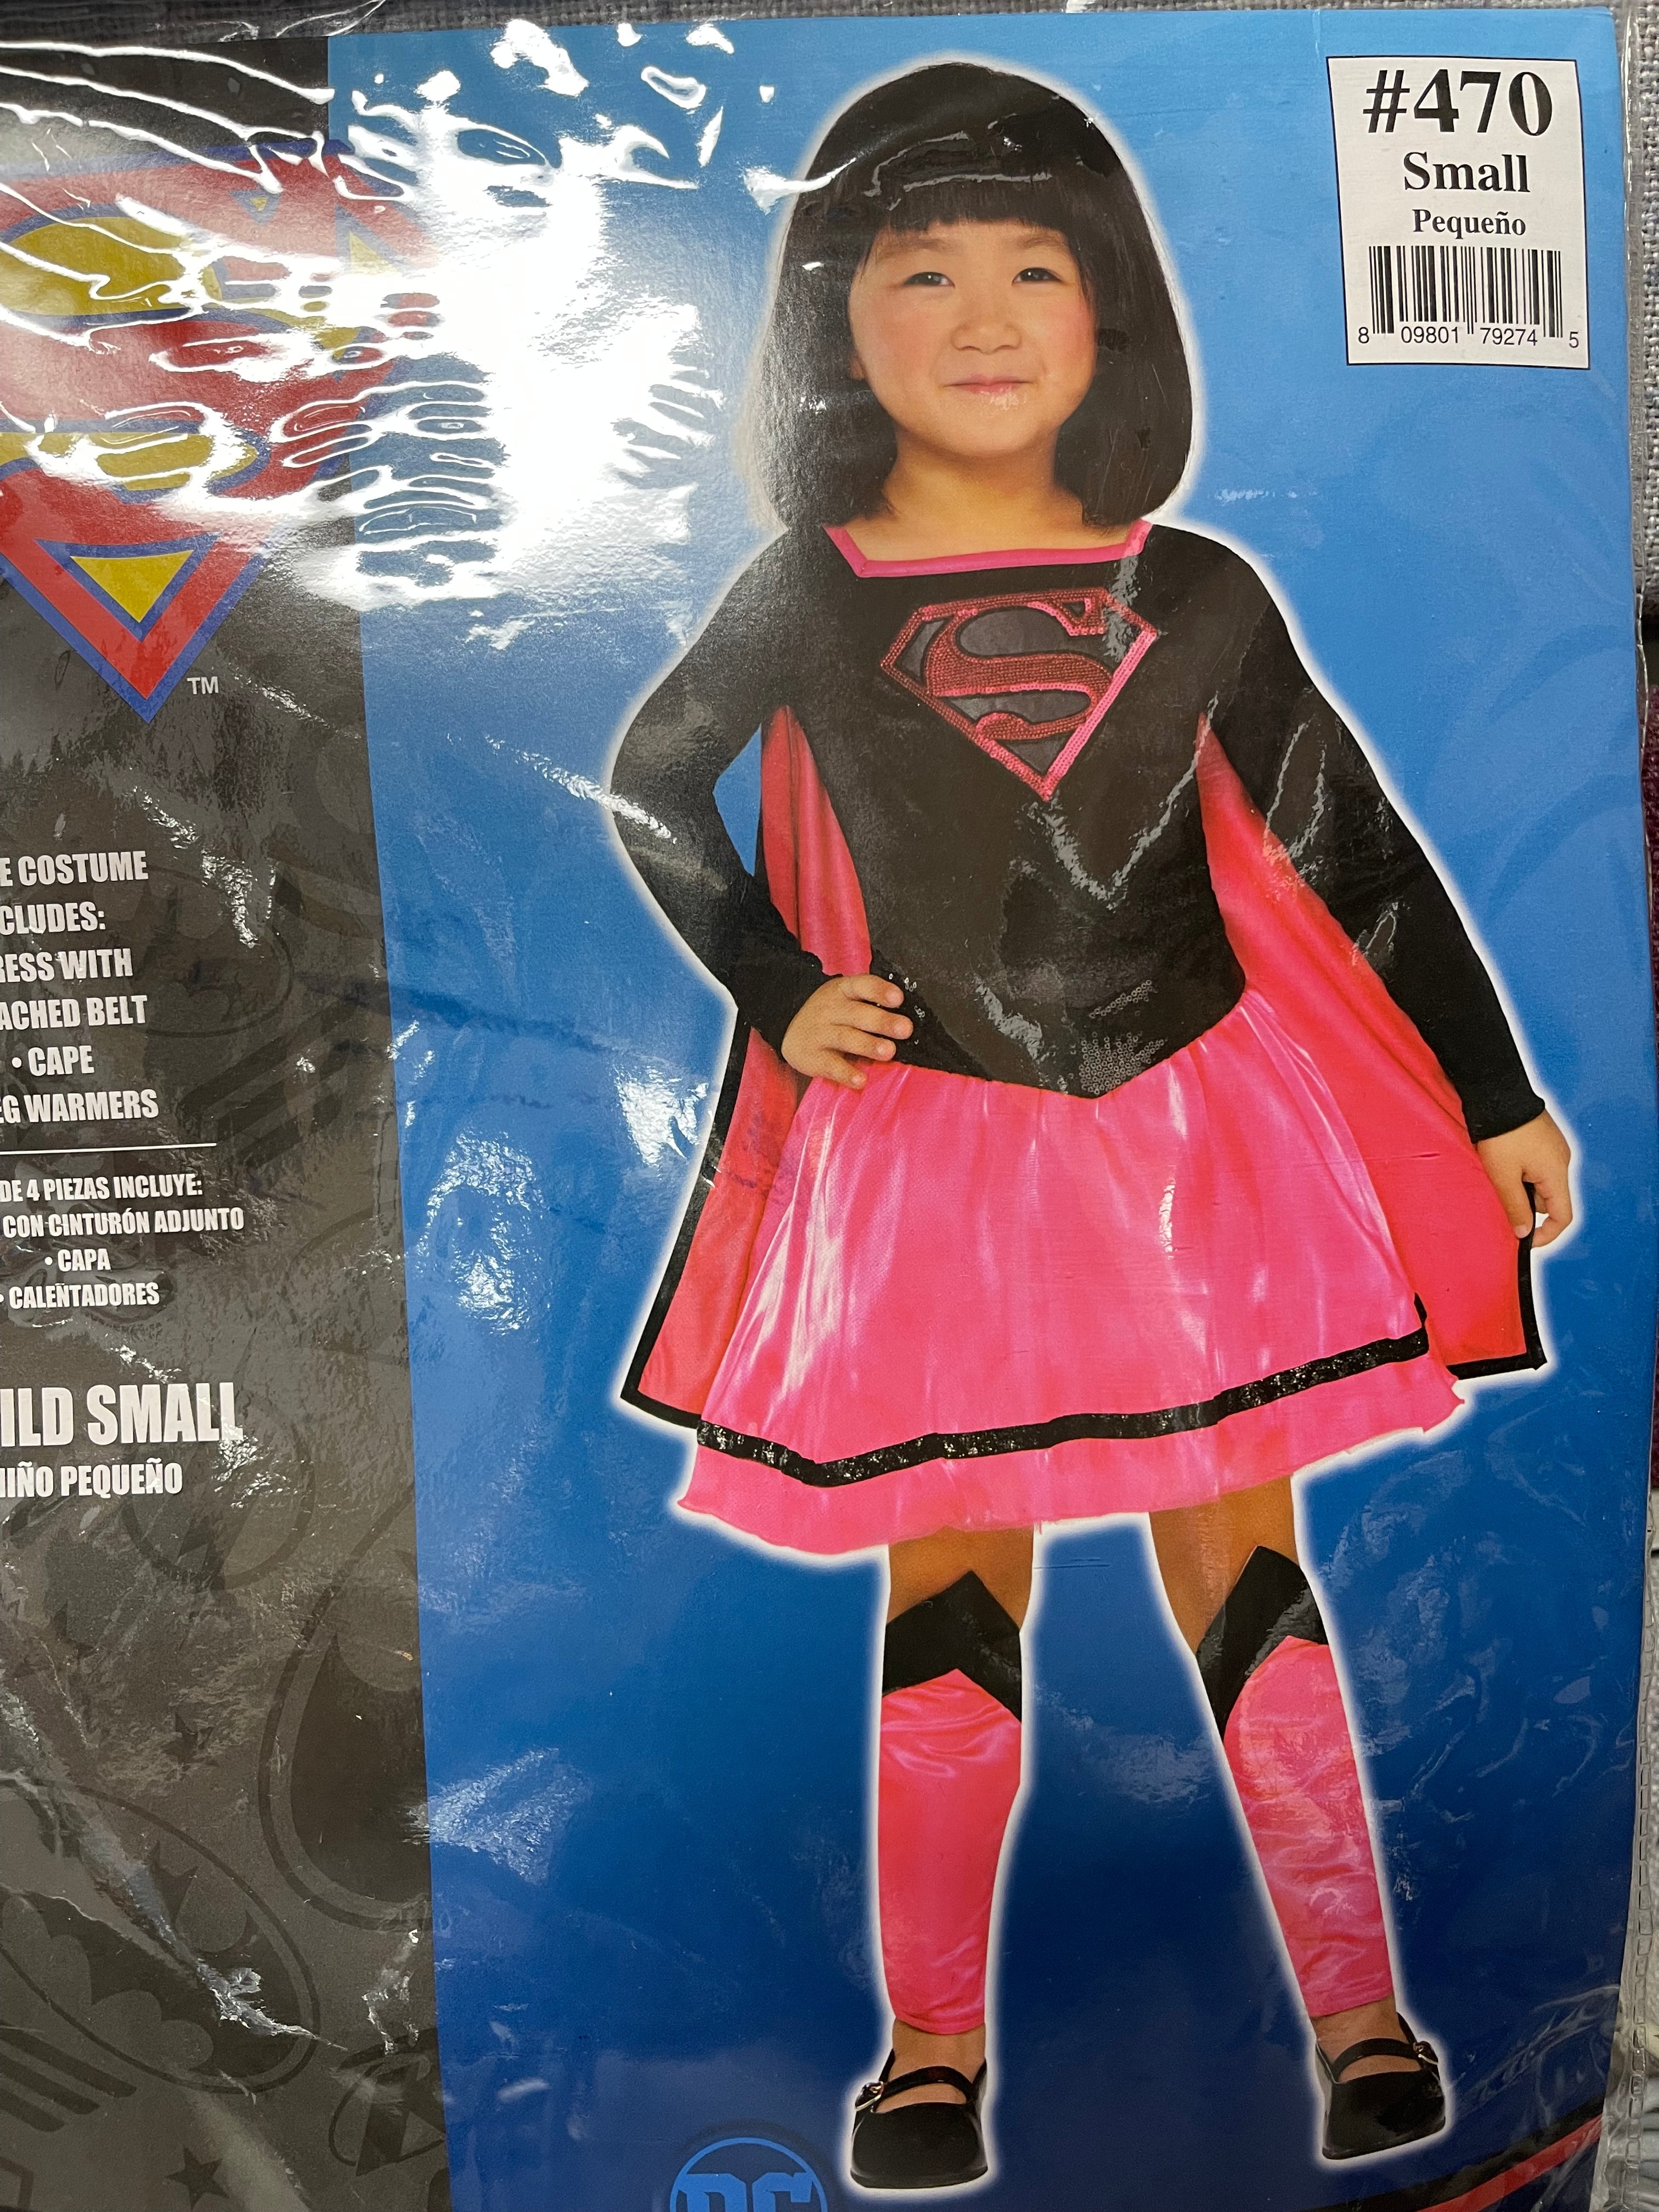 Supergirl Halloween Costume